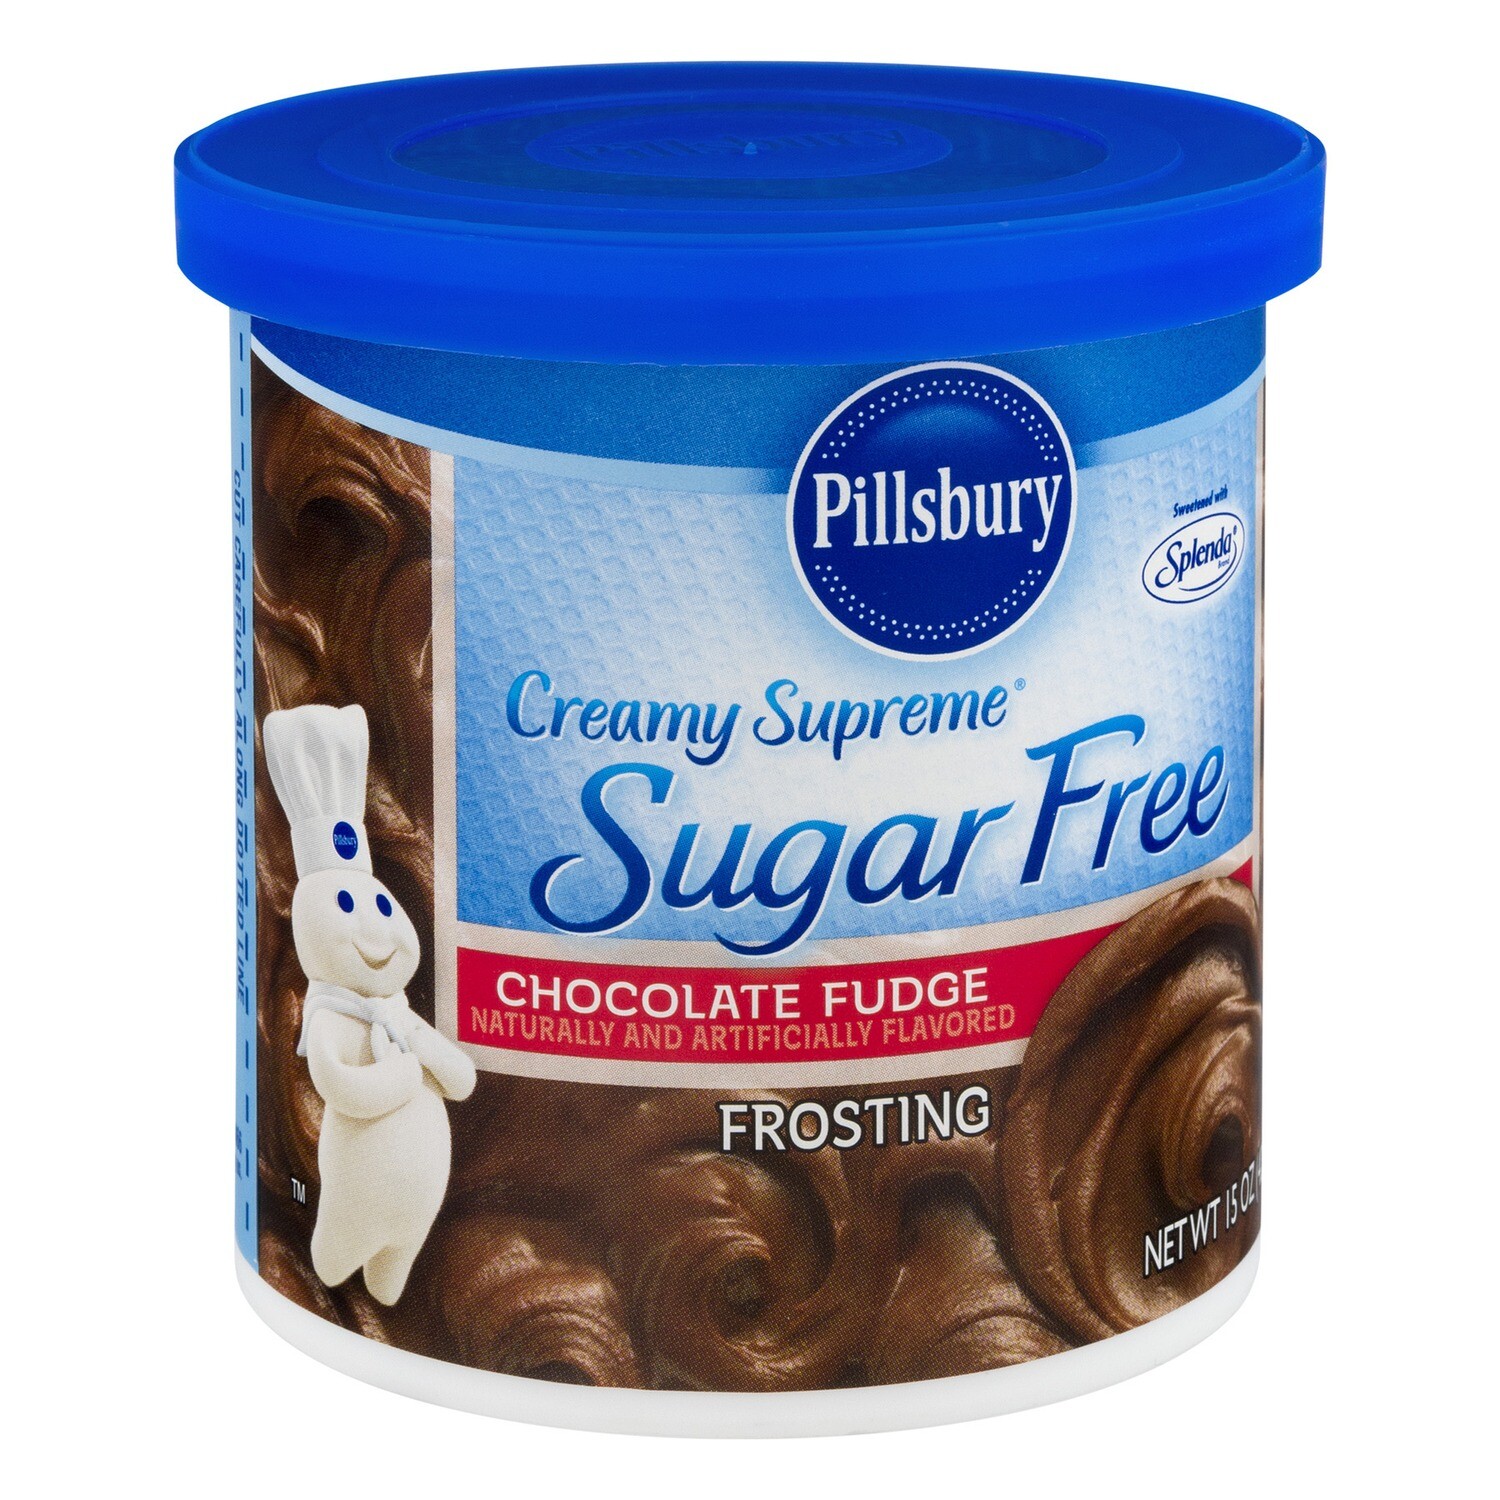 Pillsbury Creamy Supreme Sugar Free Chocolate Fudge Frsoting